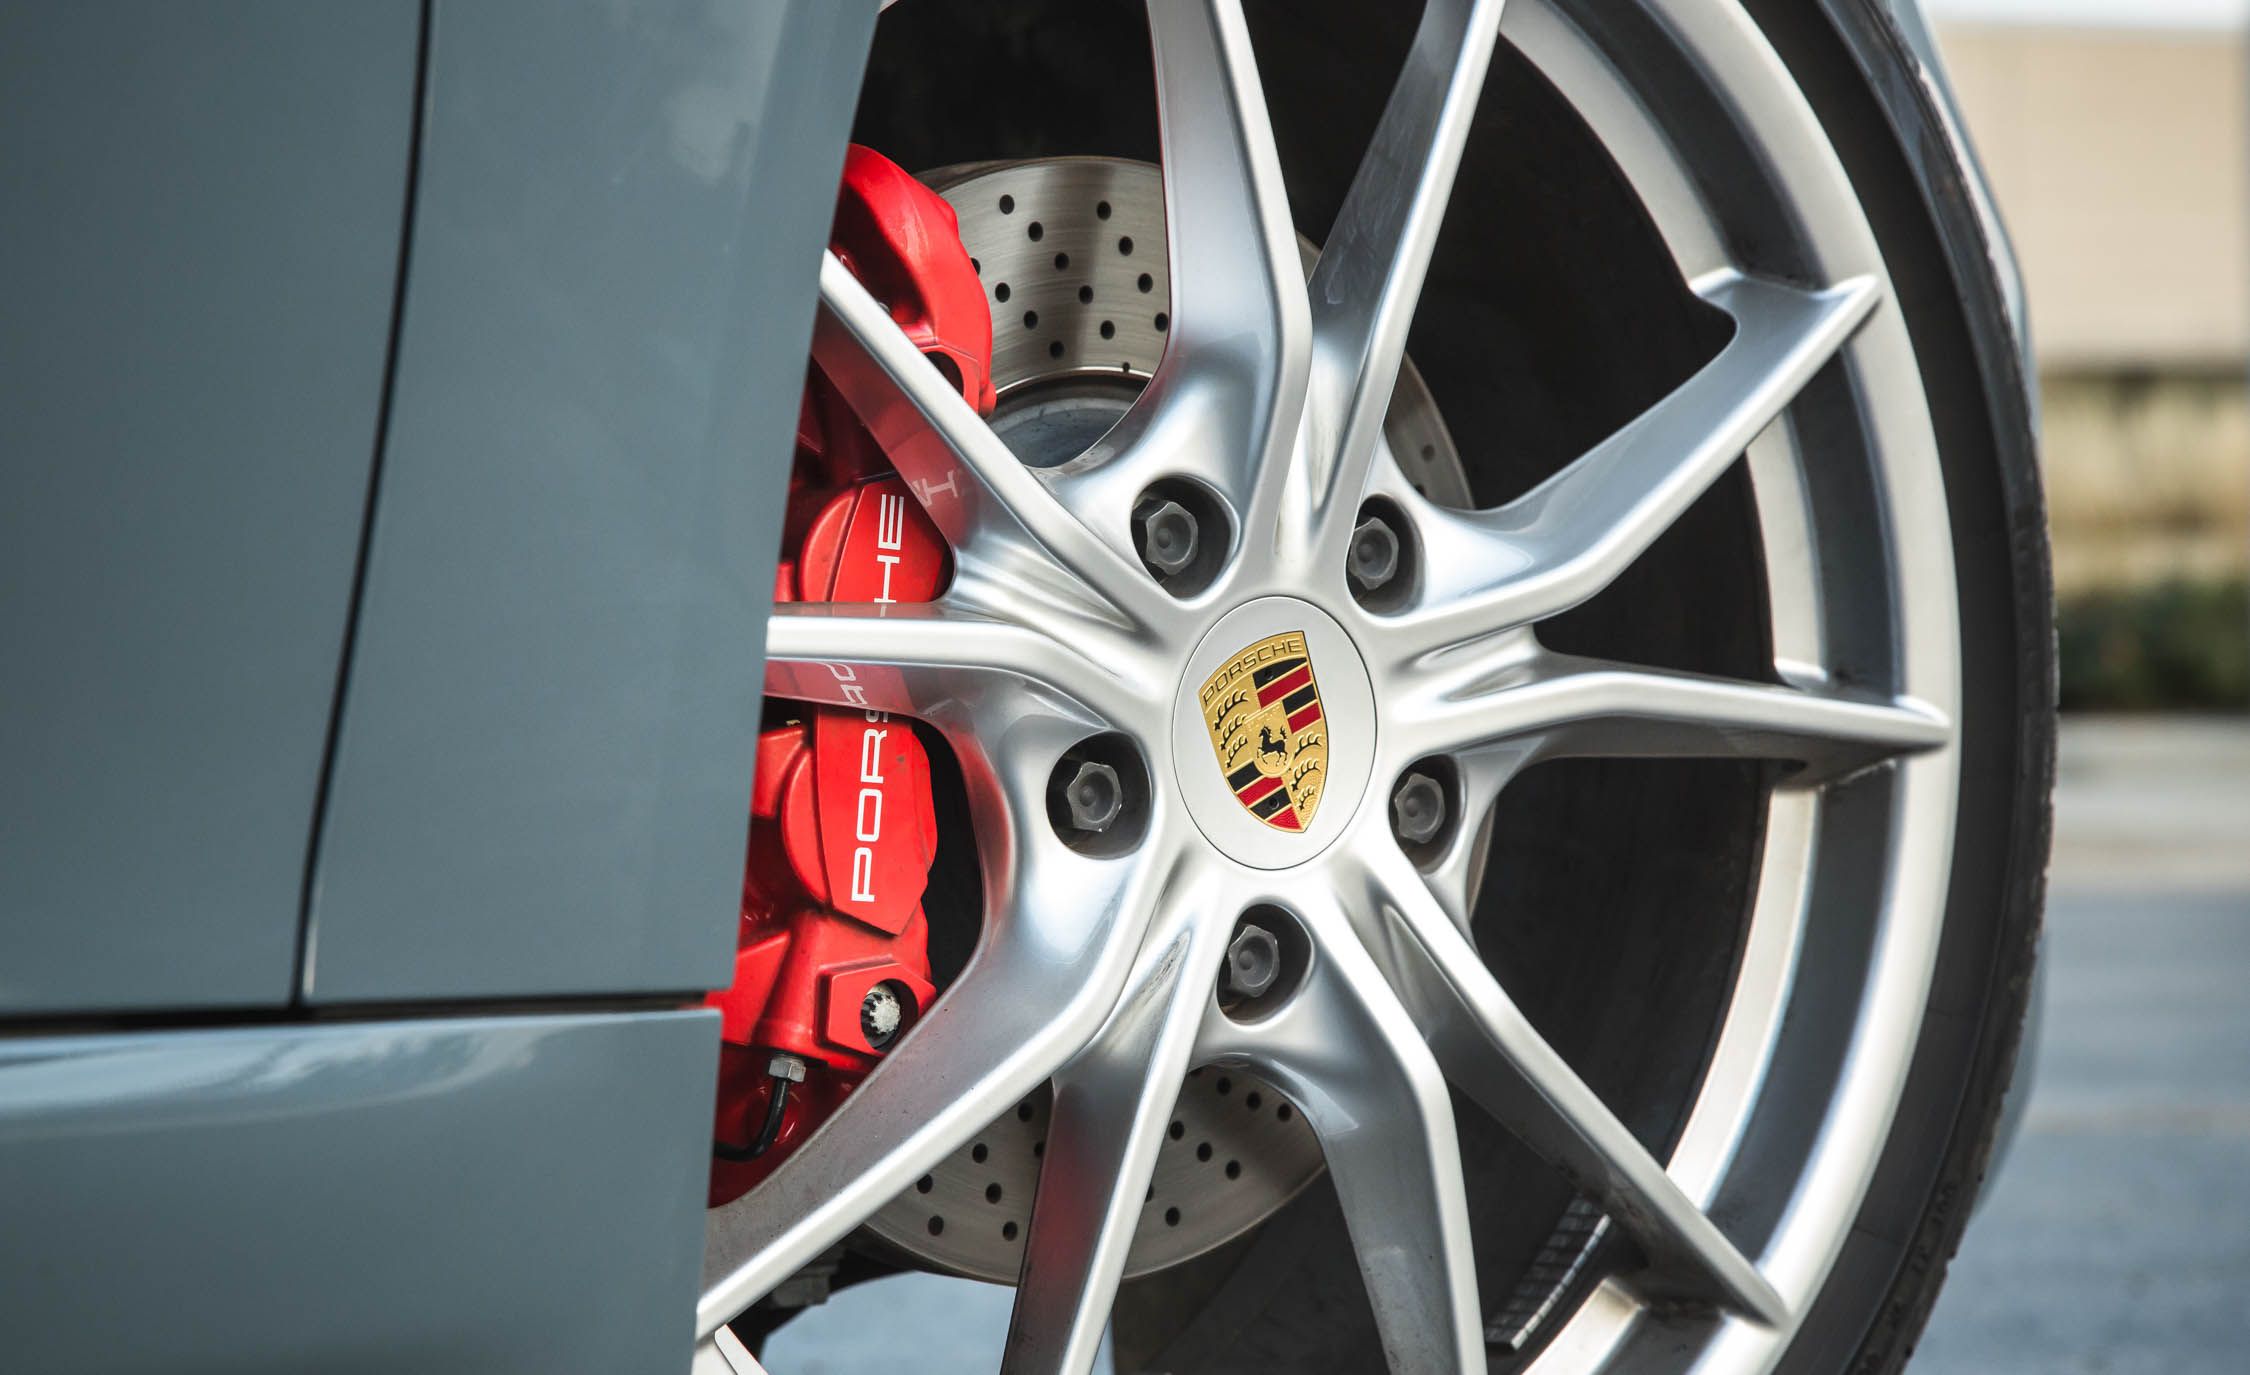 2017 Porsche 718 Boxster S Exterior View Wheel Trim (View 20 of 71)